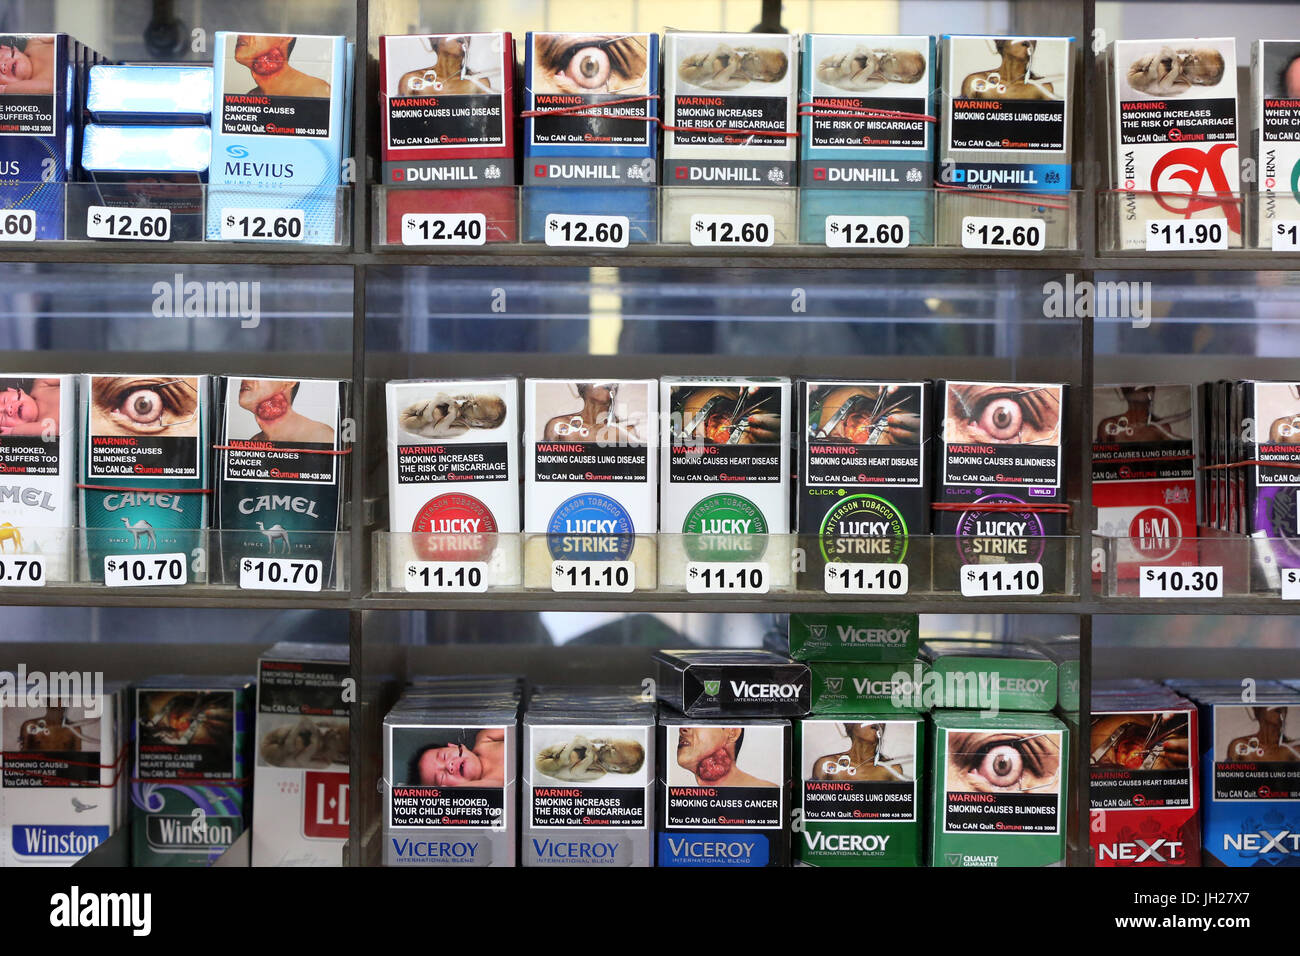 cigarettes-for-sale-singapore-stock-photo-148182223-alamy